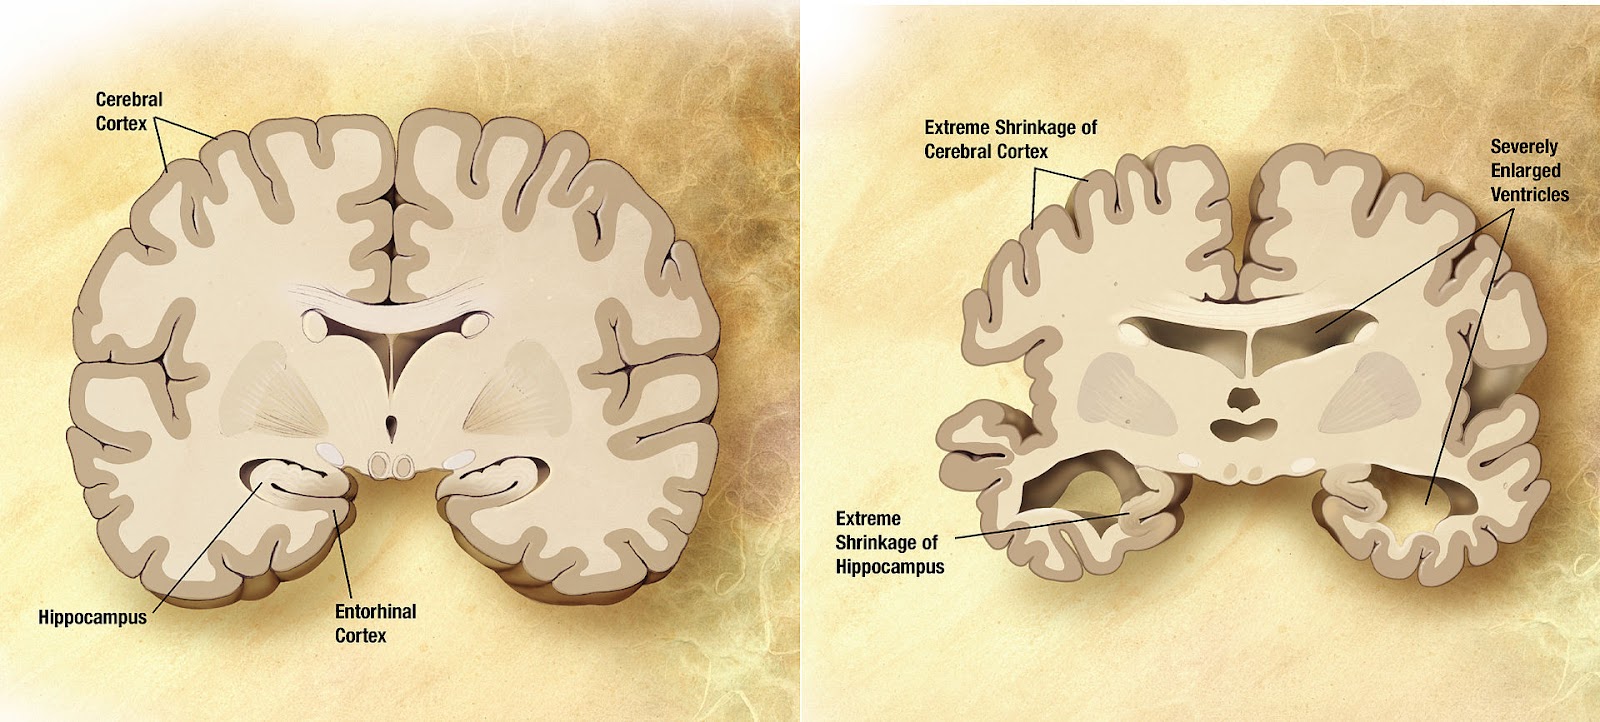 Alzheimer's_disease_brain_comparison.jpg